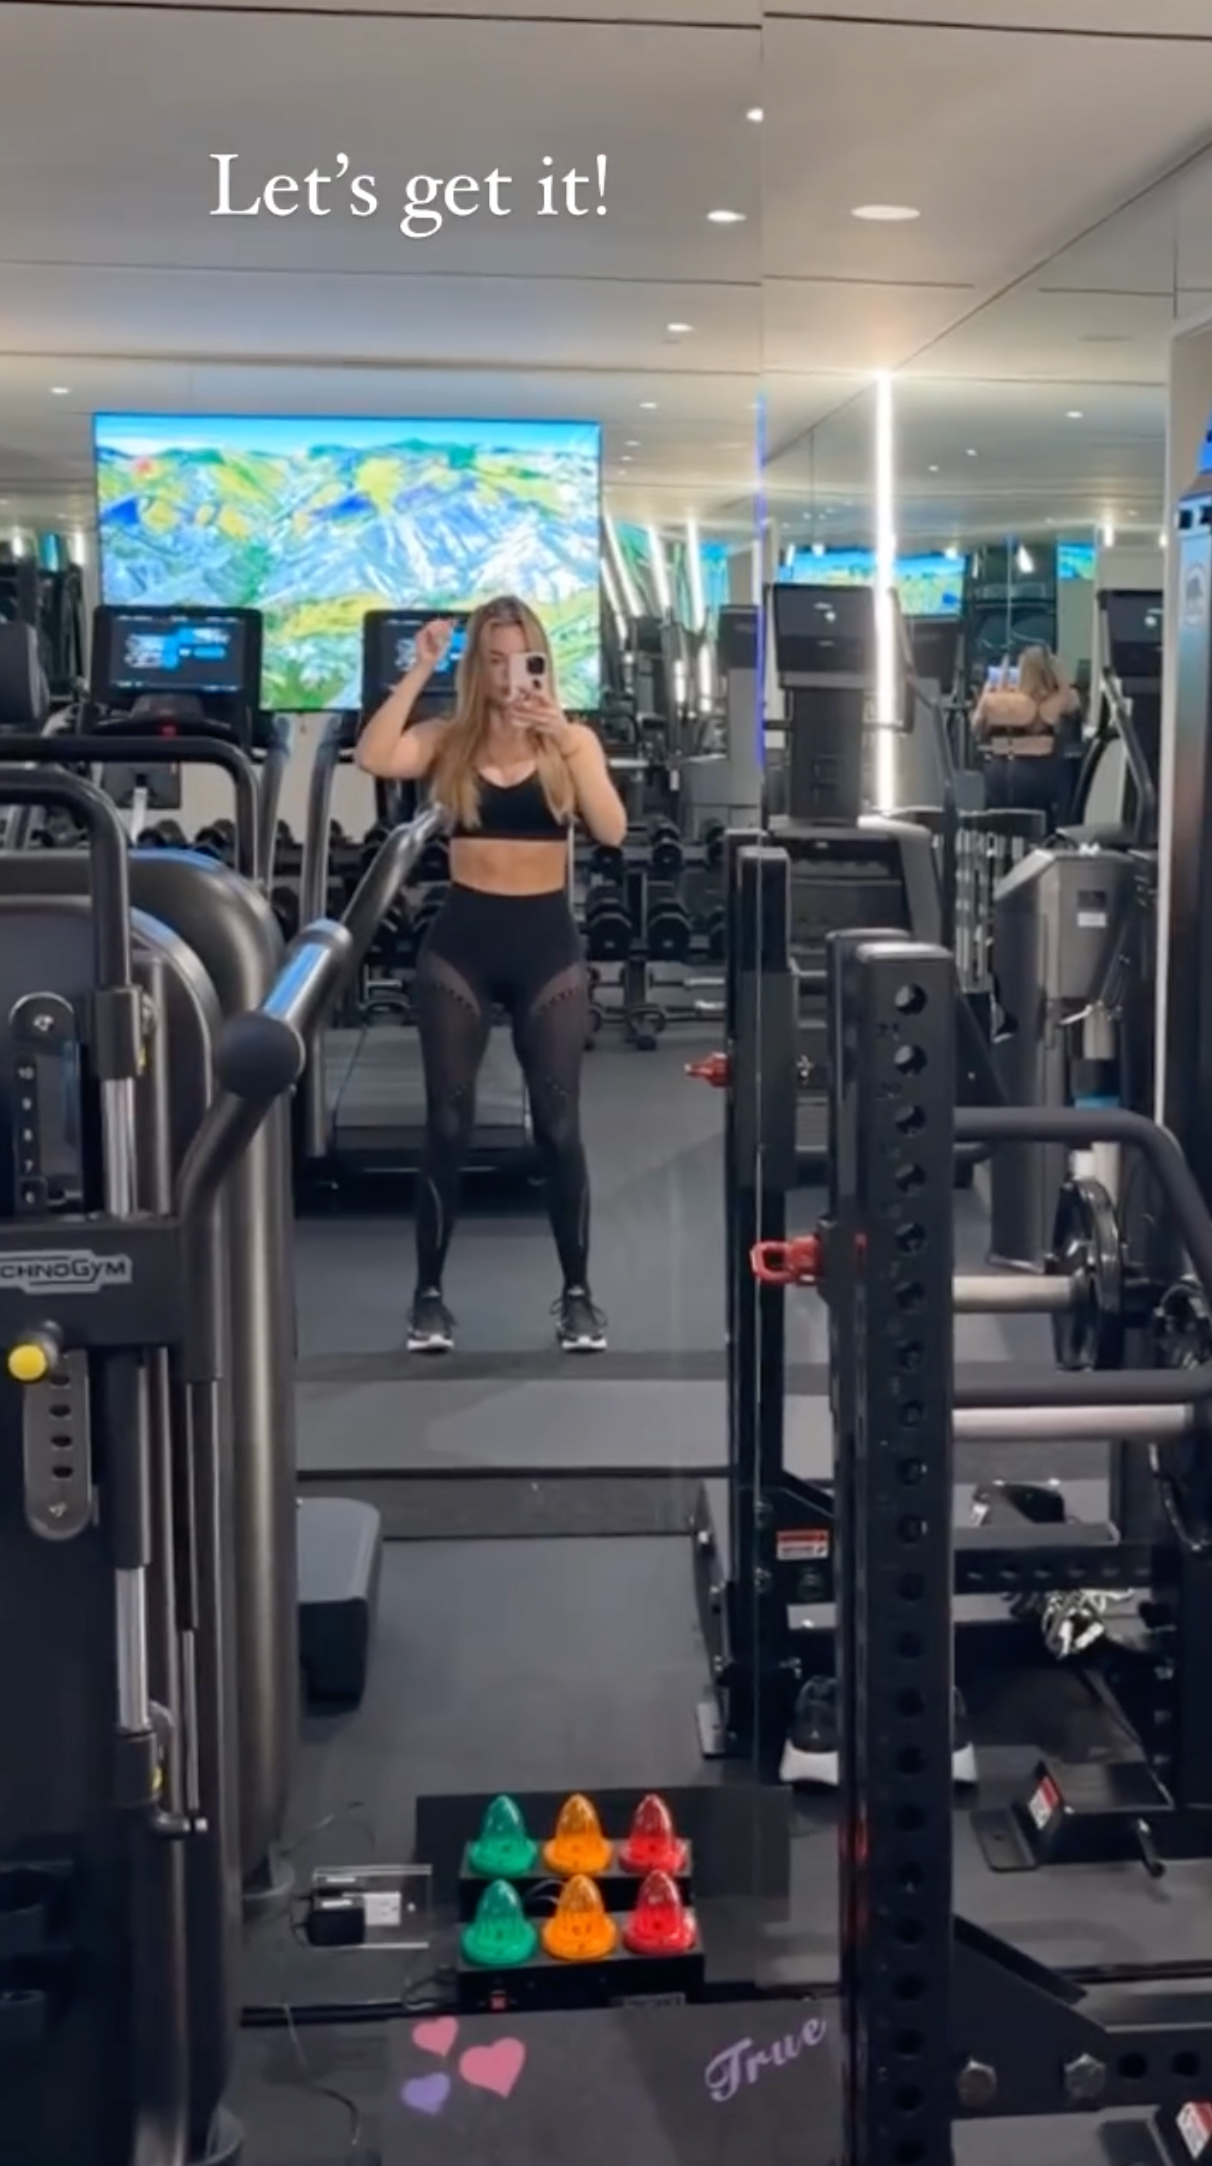 Khloe often shares snaps inside the gym, showcasing her slim figure